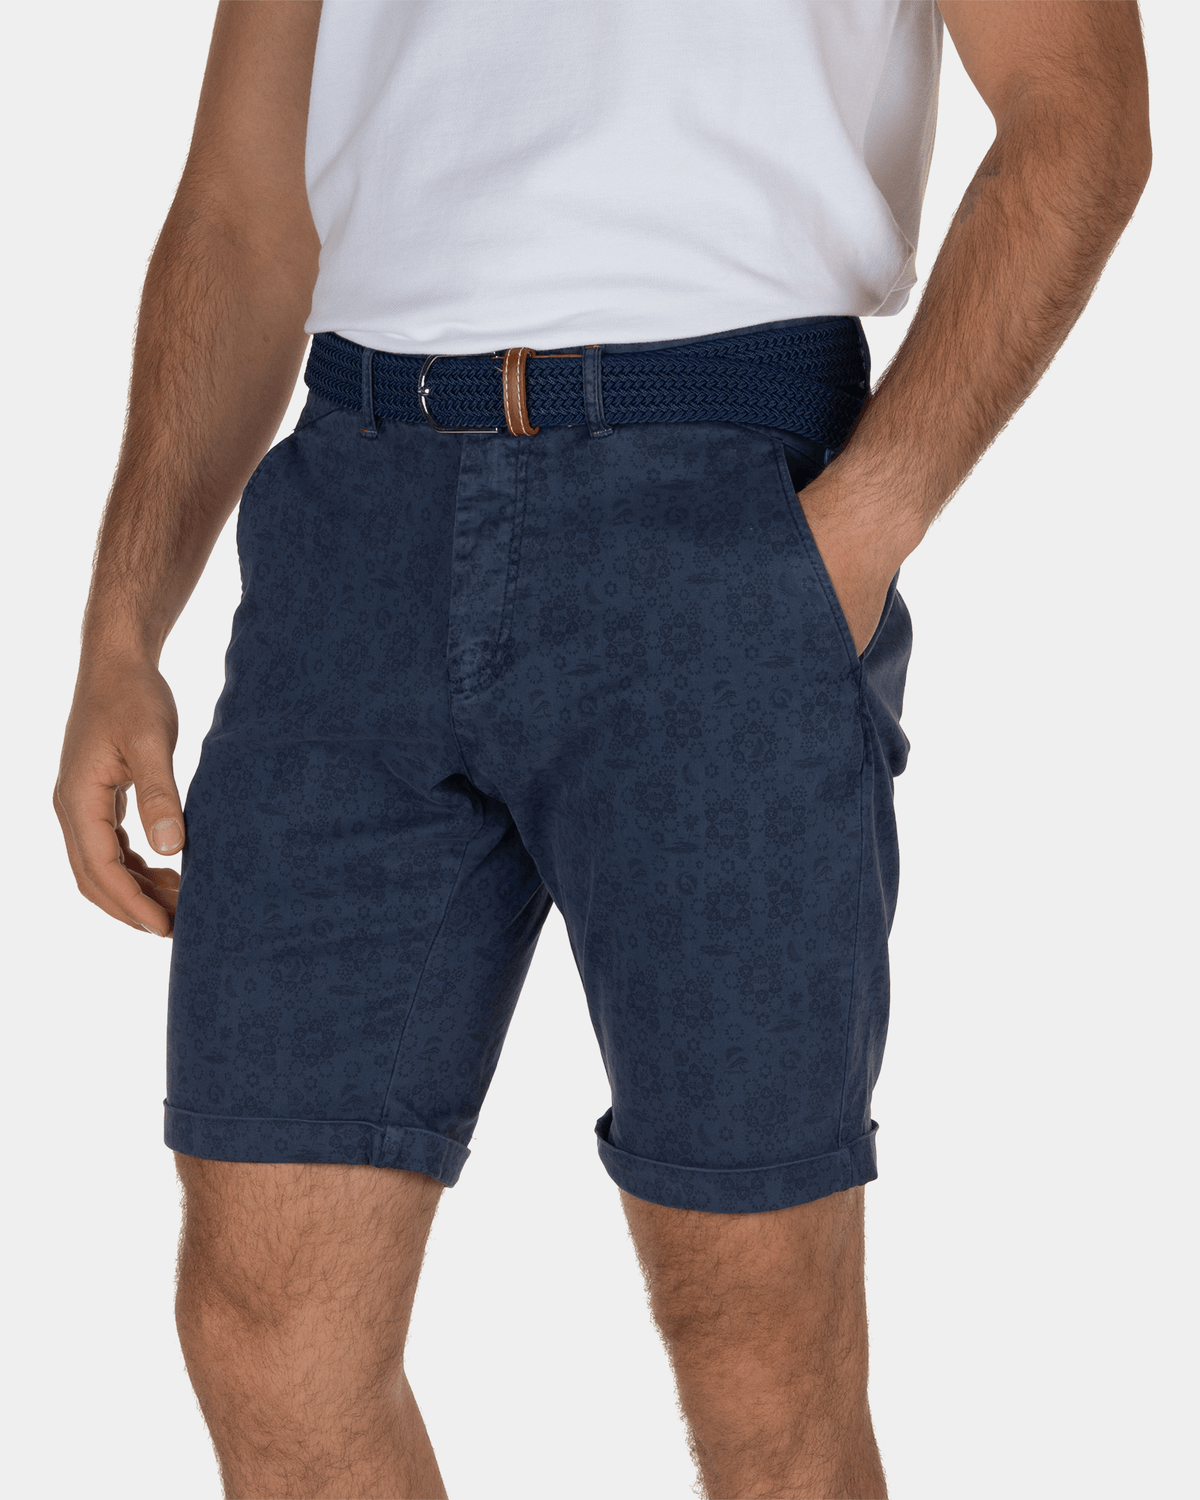 Shorts with print Plimmerton - Urban Navy